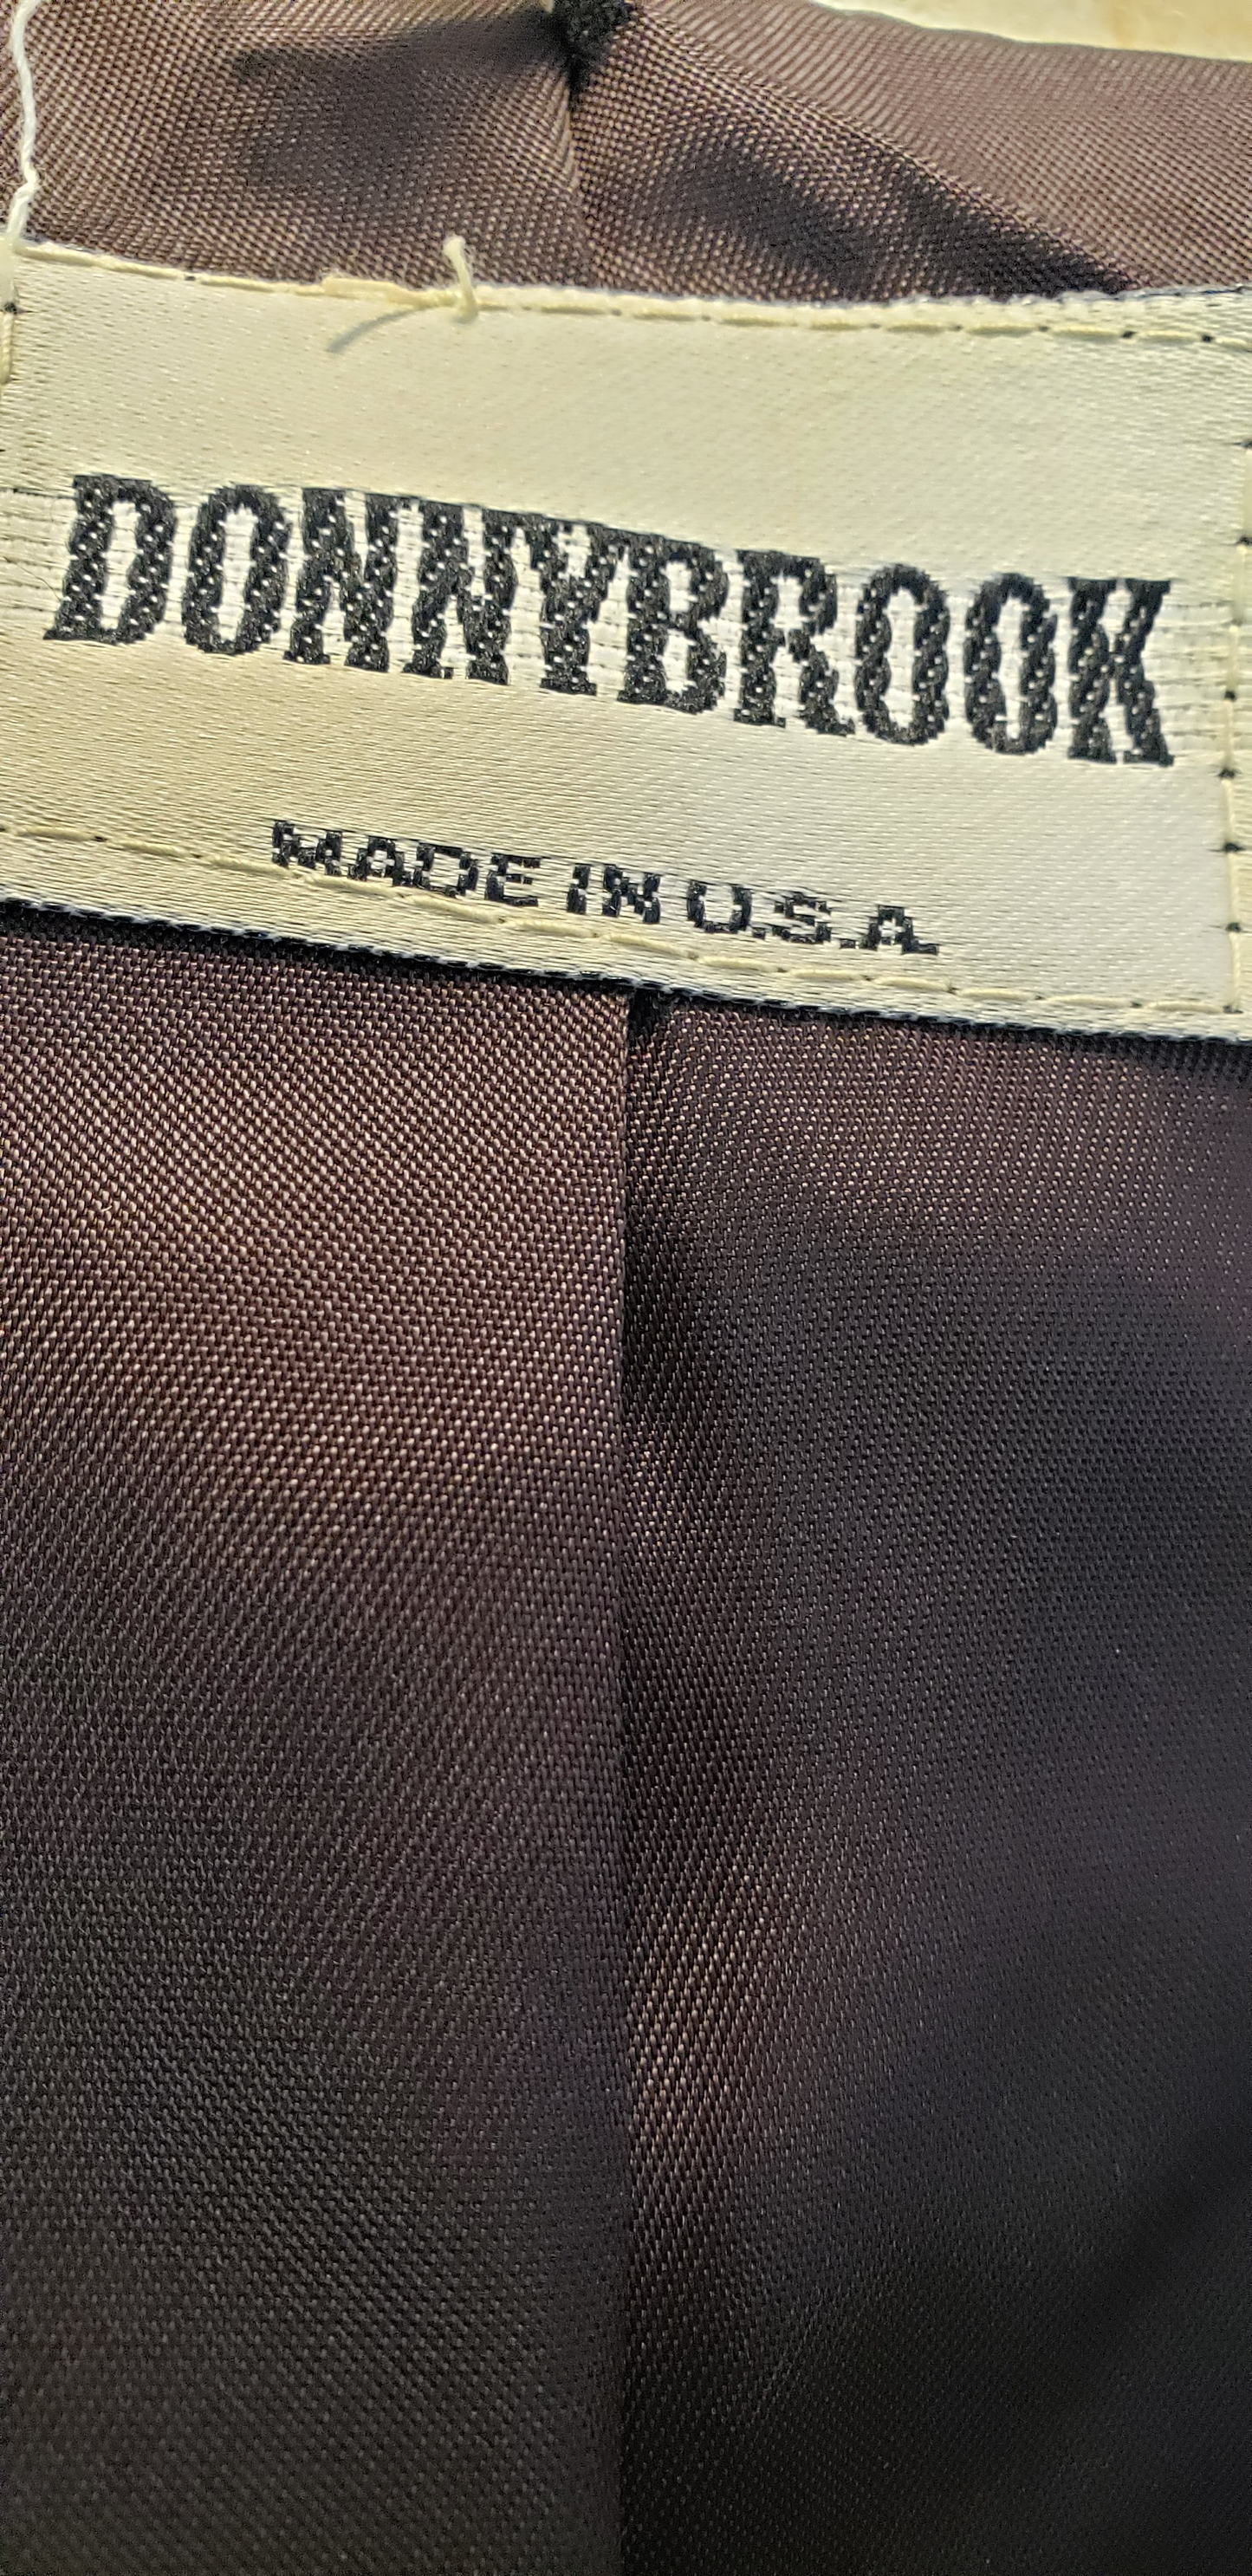 Donnybrook Faux Fur Animal Print Coat Sz L